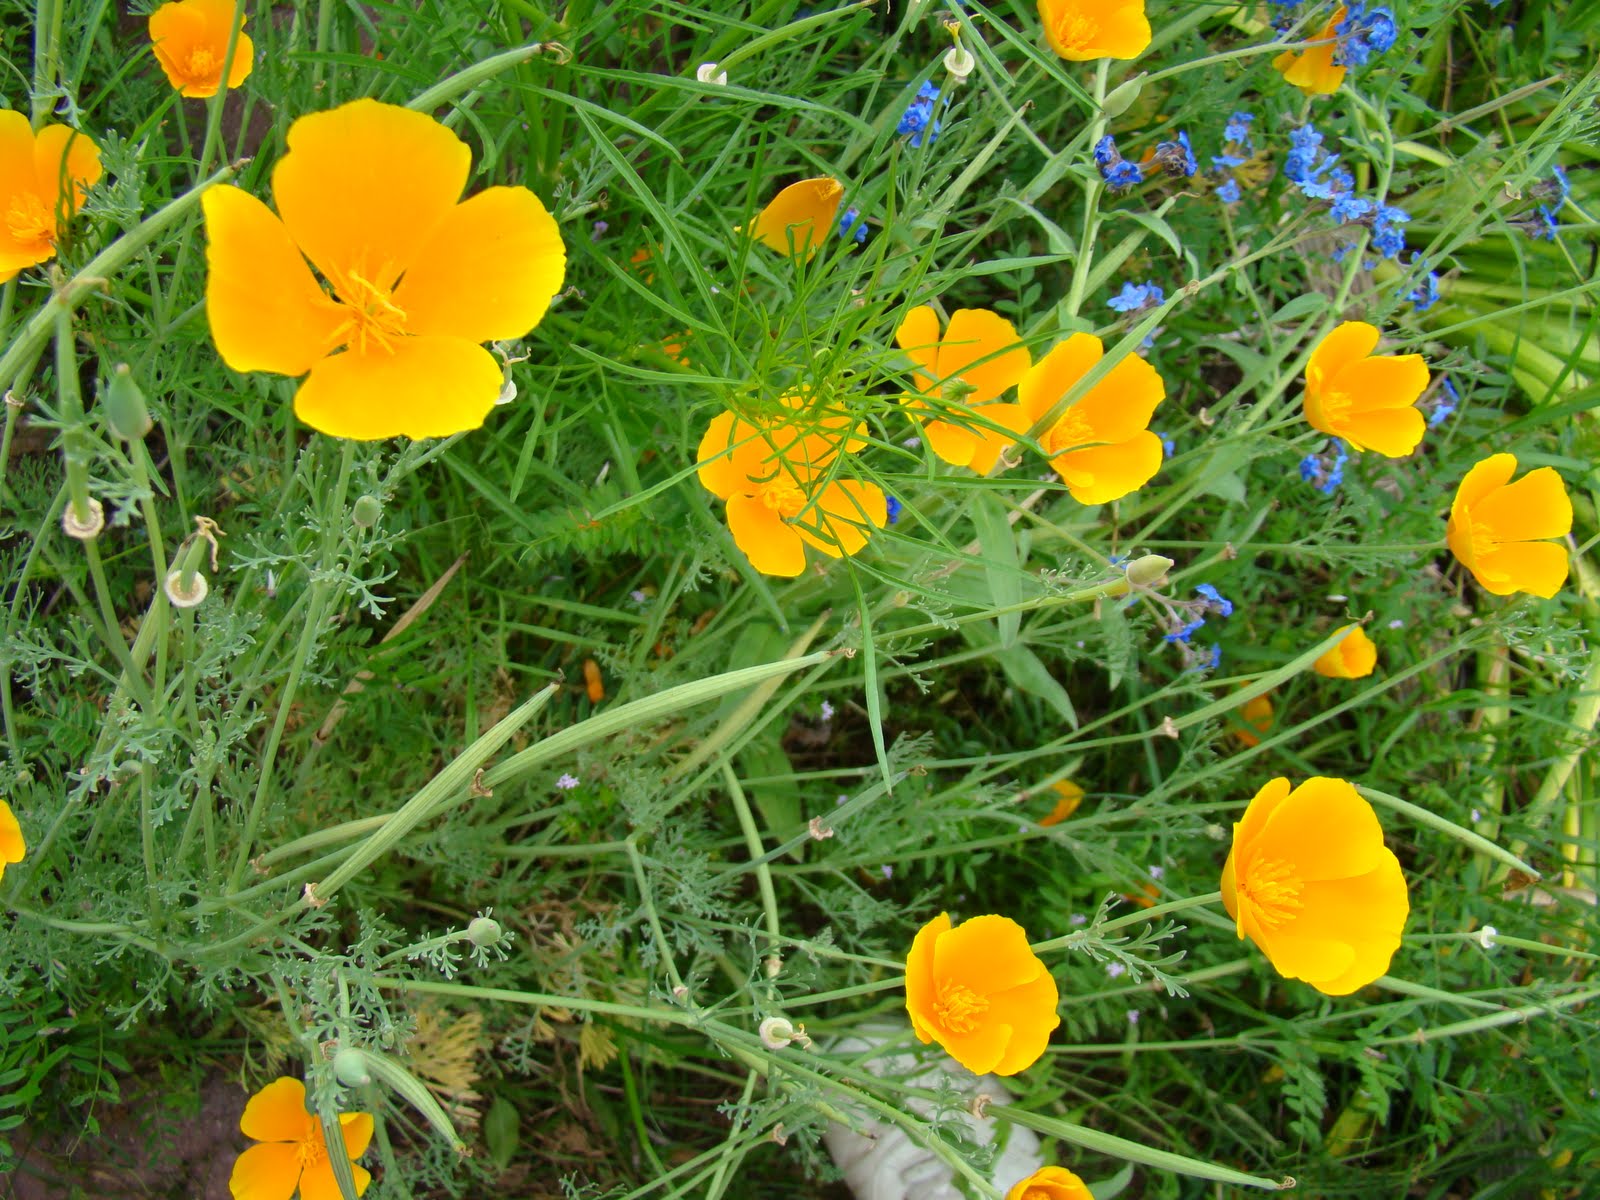 MYEVERYDAYLIFE: Yellow,orange and brown wild flowers